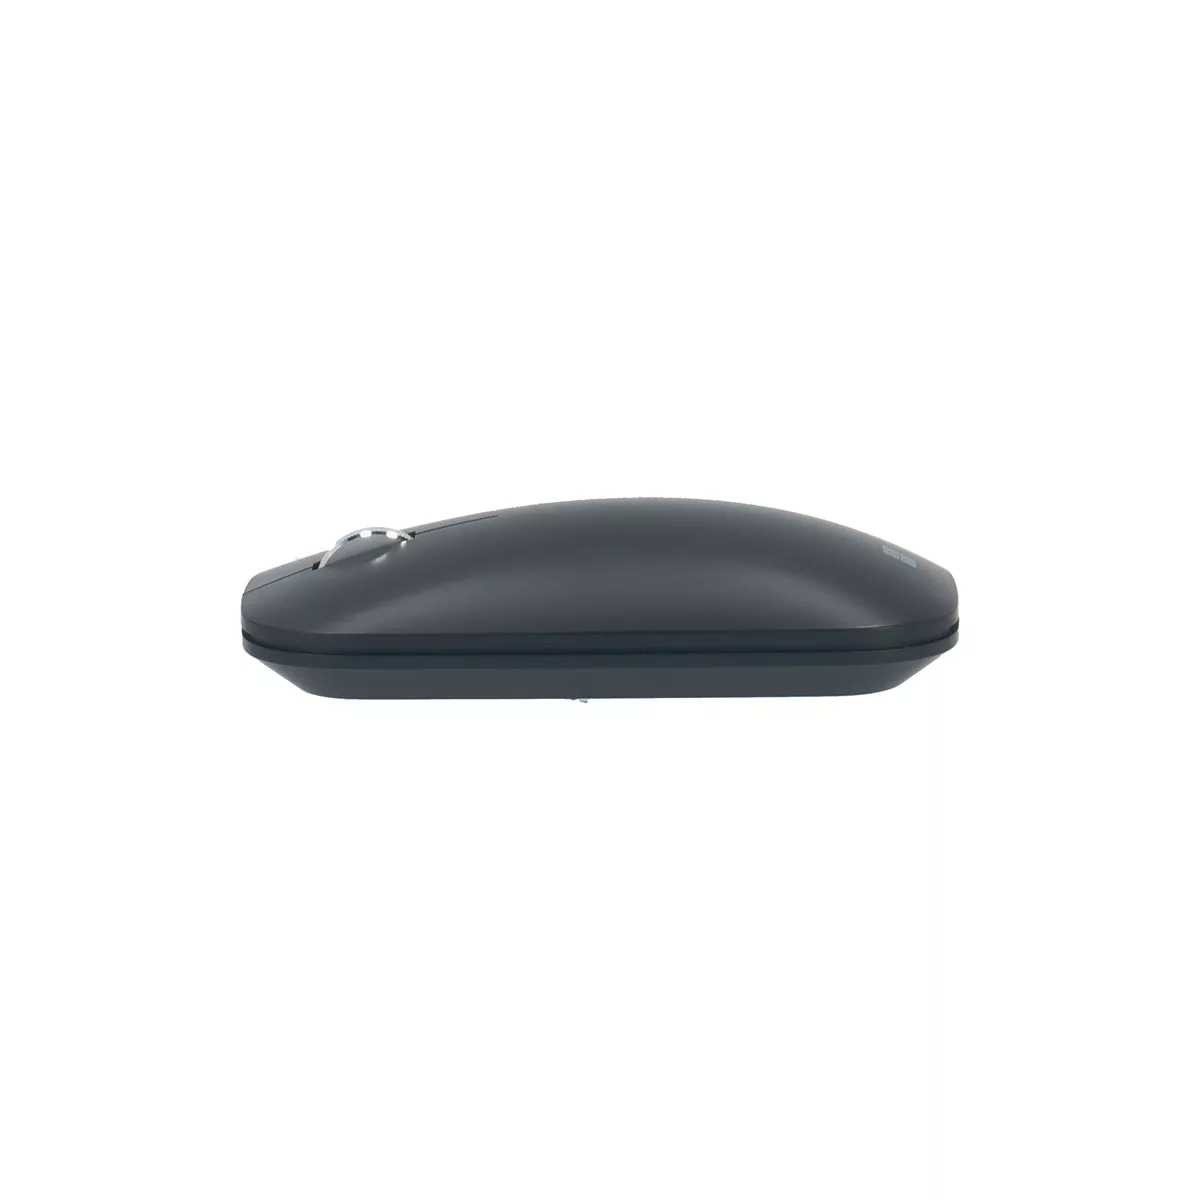 Original Microsoft Surface Mobile Mouse